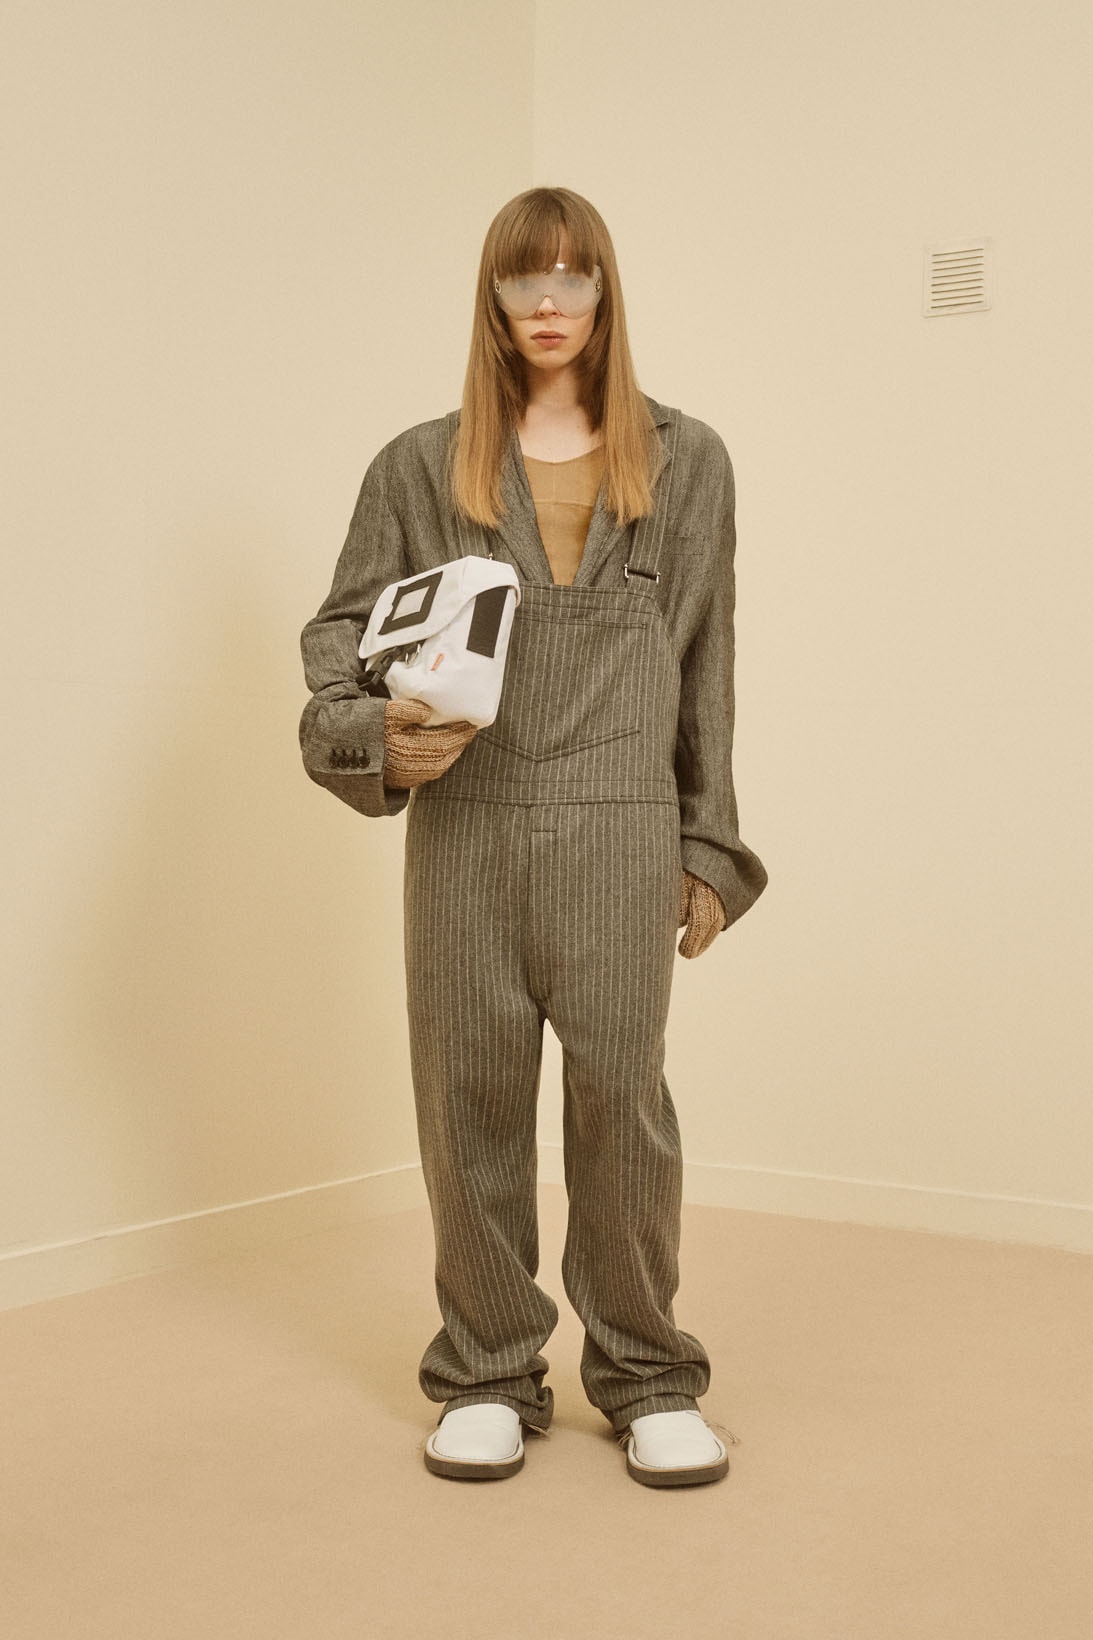 acne studios menswear fall winter 2021 fw21 collection lookbook striped overalls